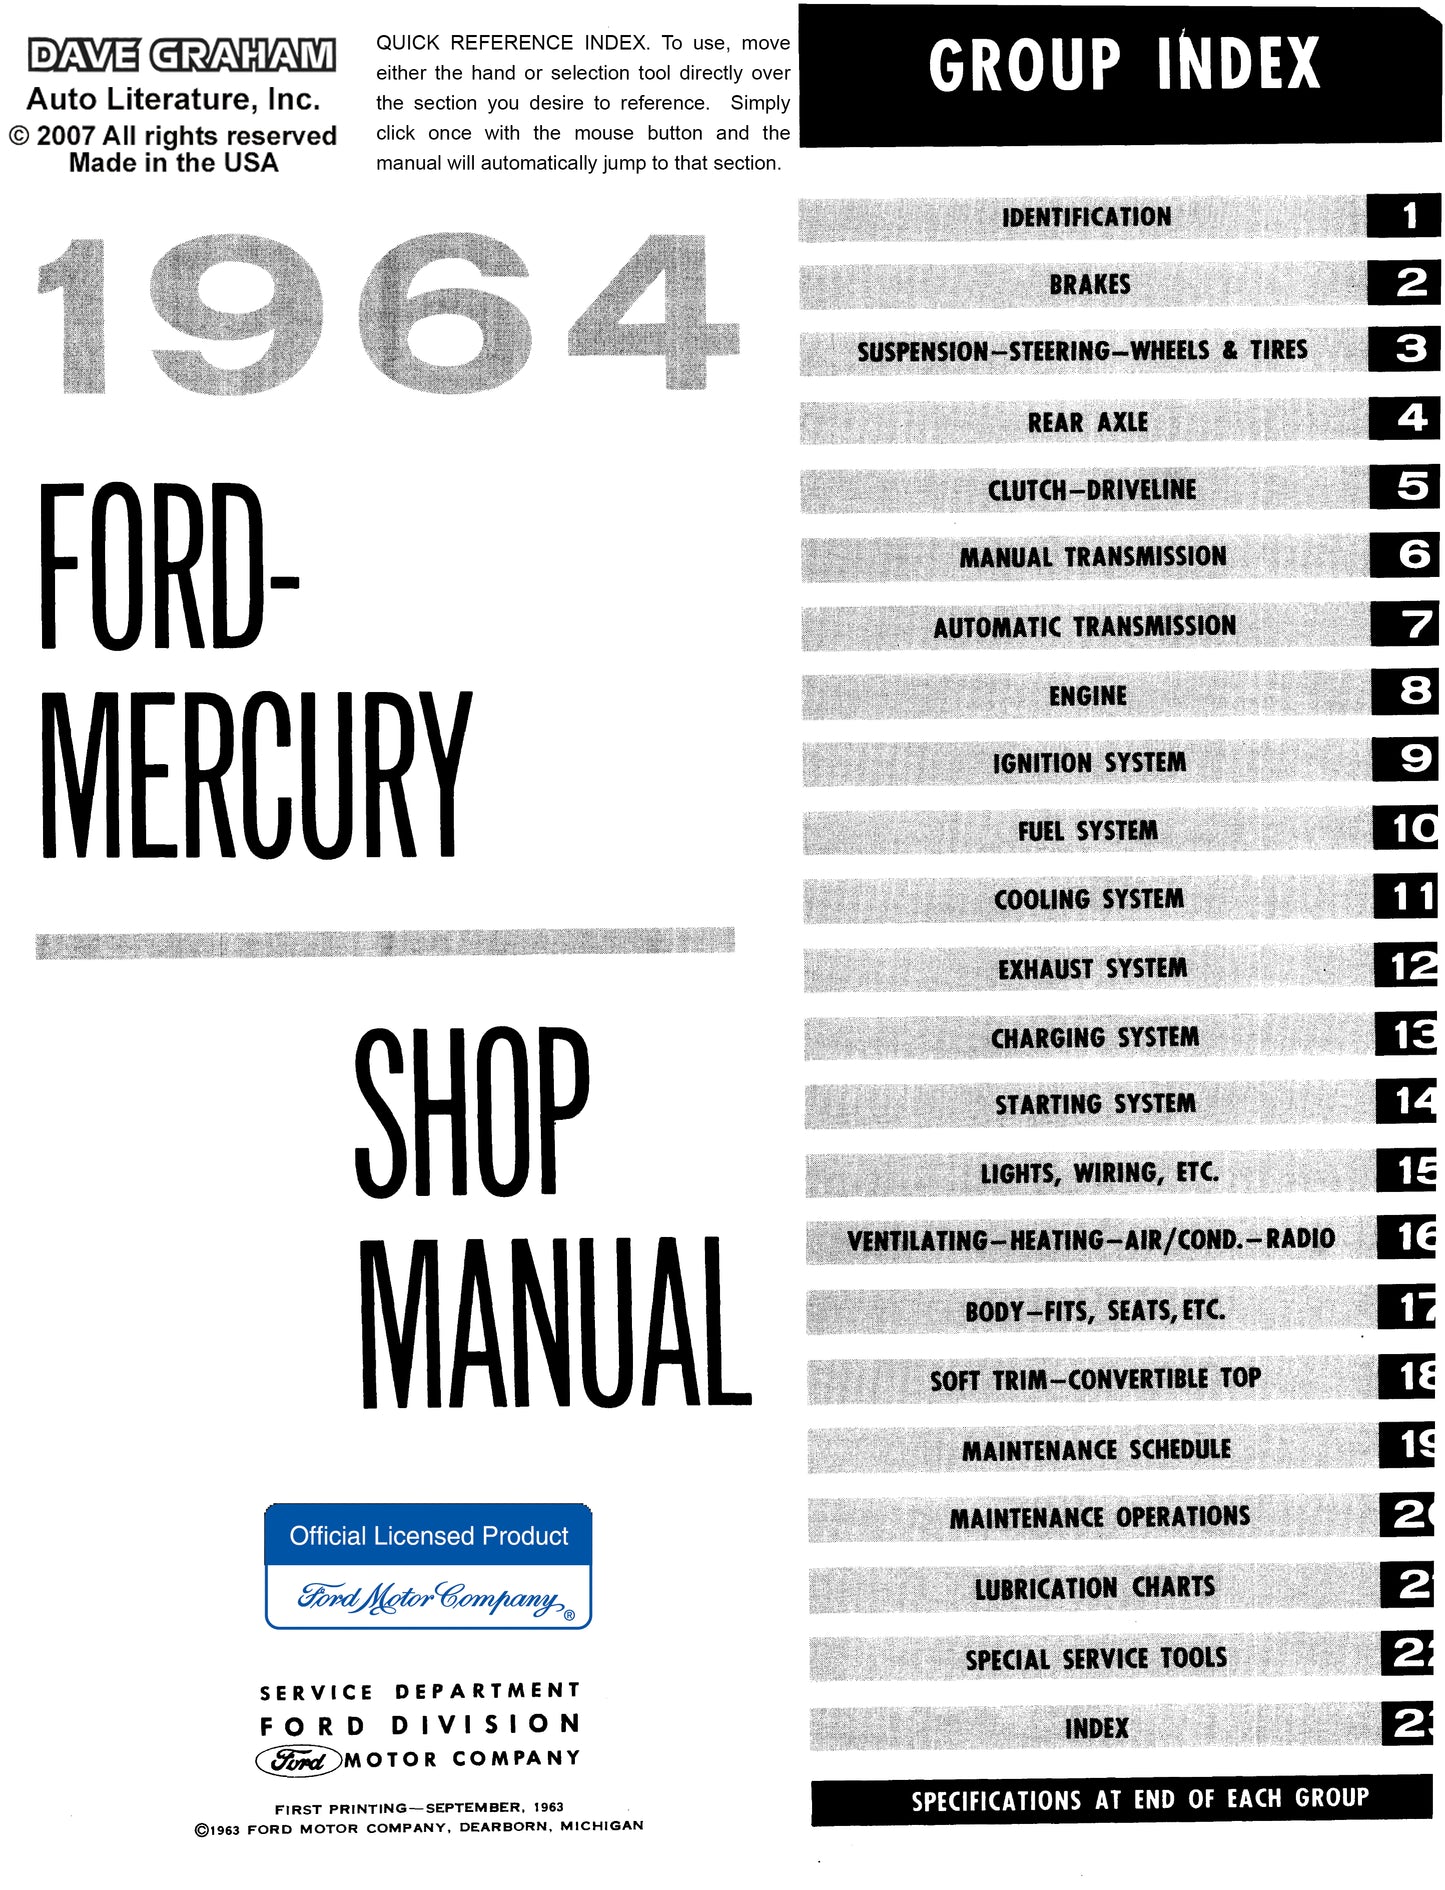 1964 Ford Shop Manual - All Models